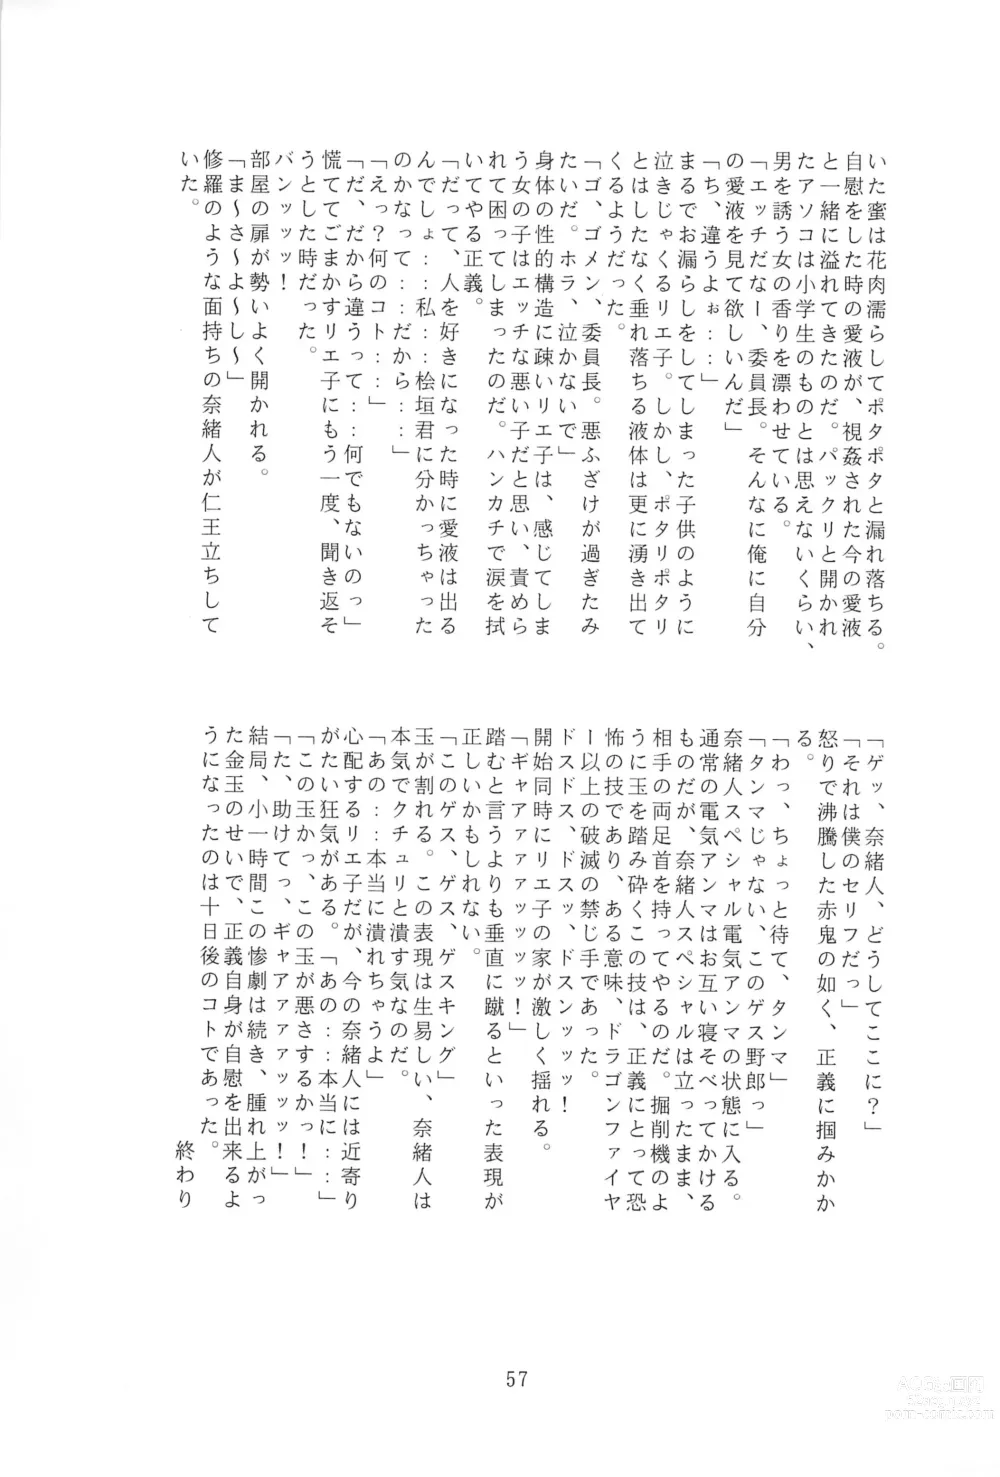 Page 57 of doujinshi JANGLE ONI Mermaid